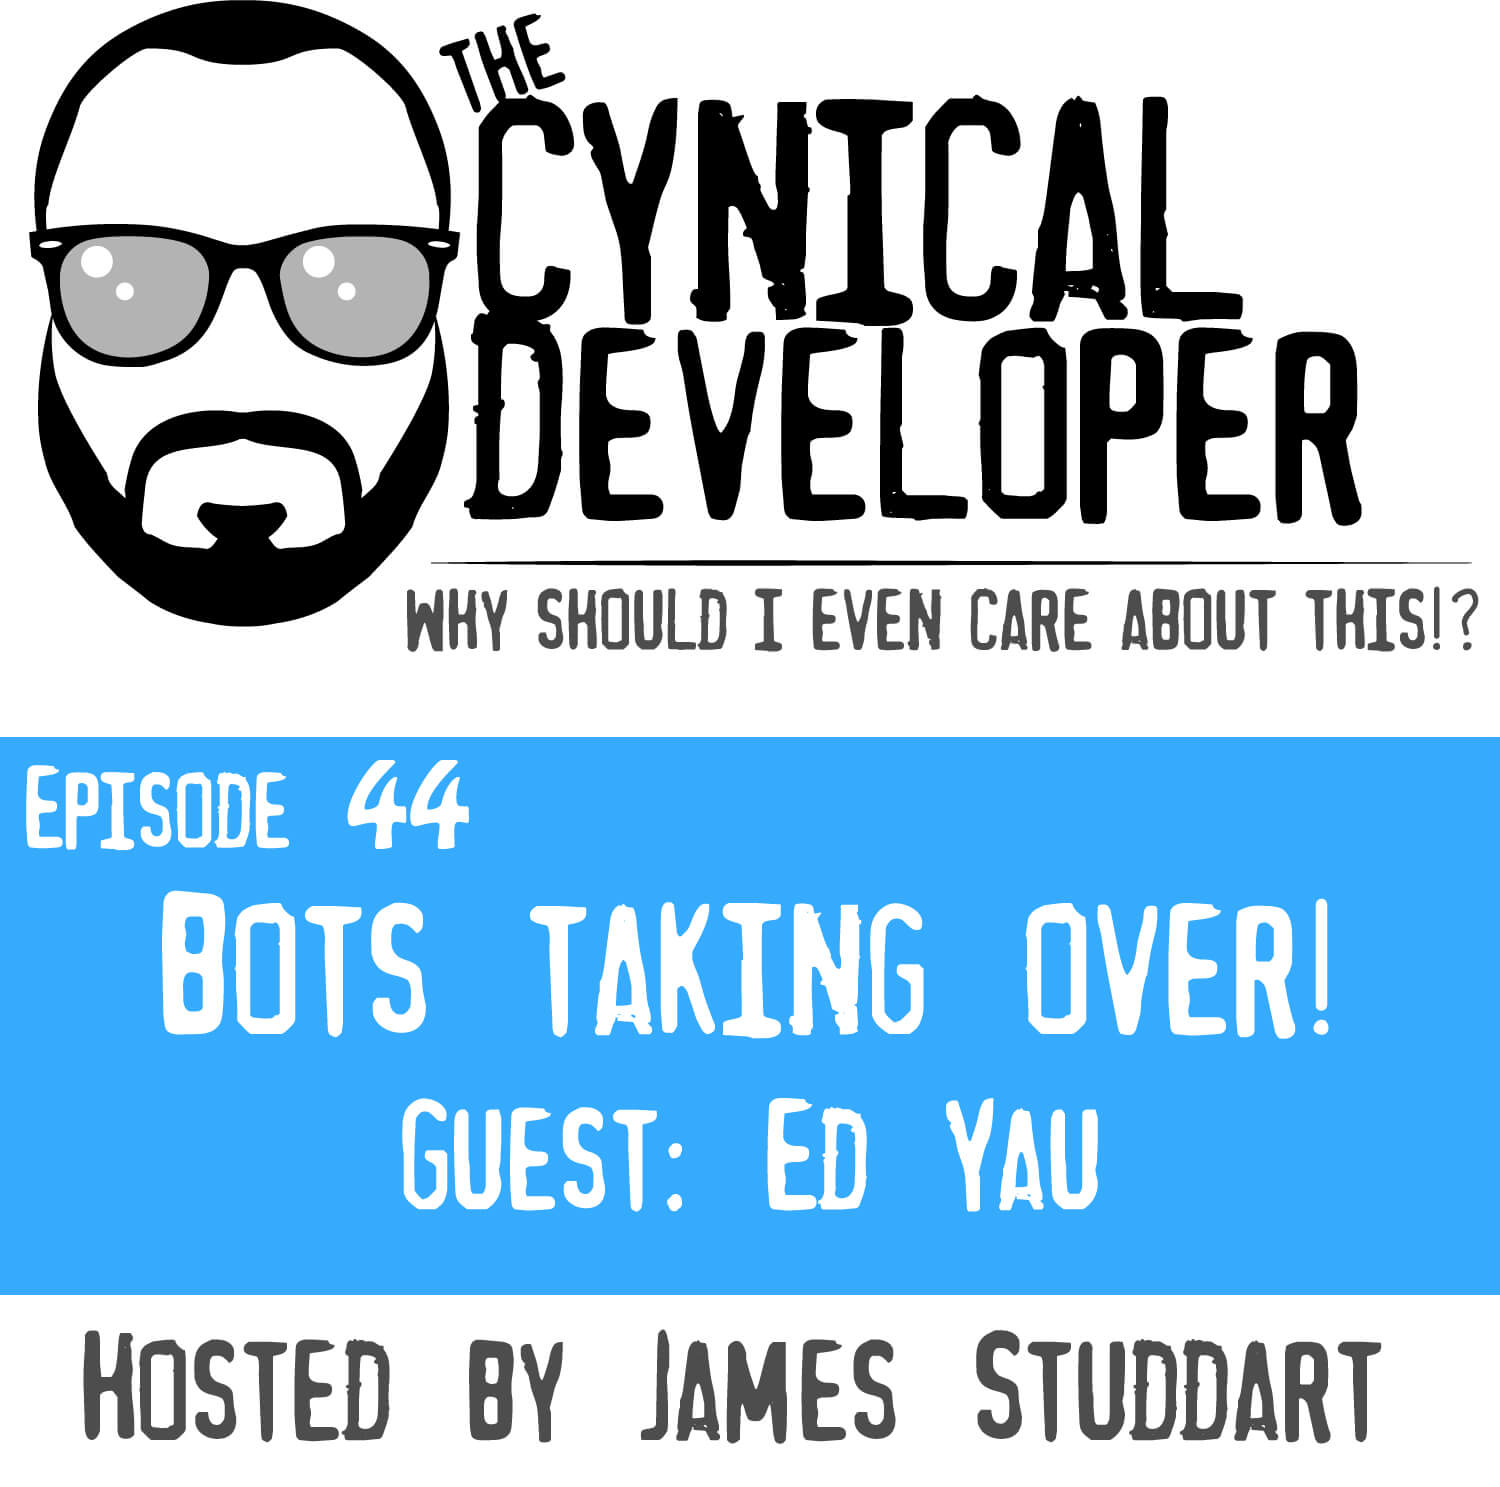 Episode 44 - Bots taking over